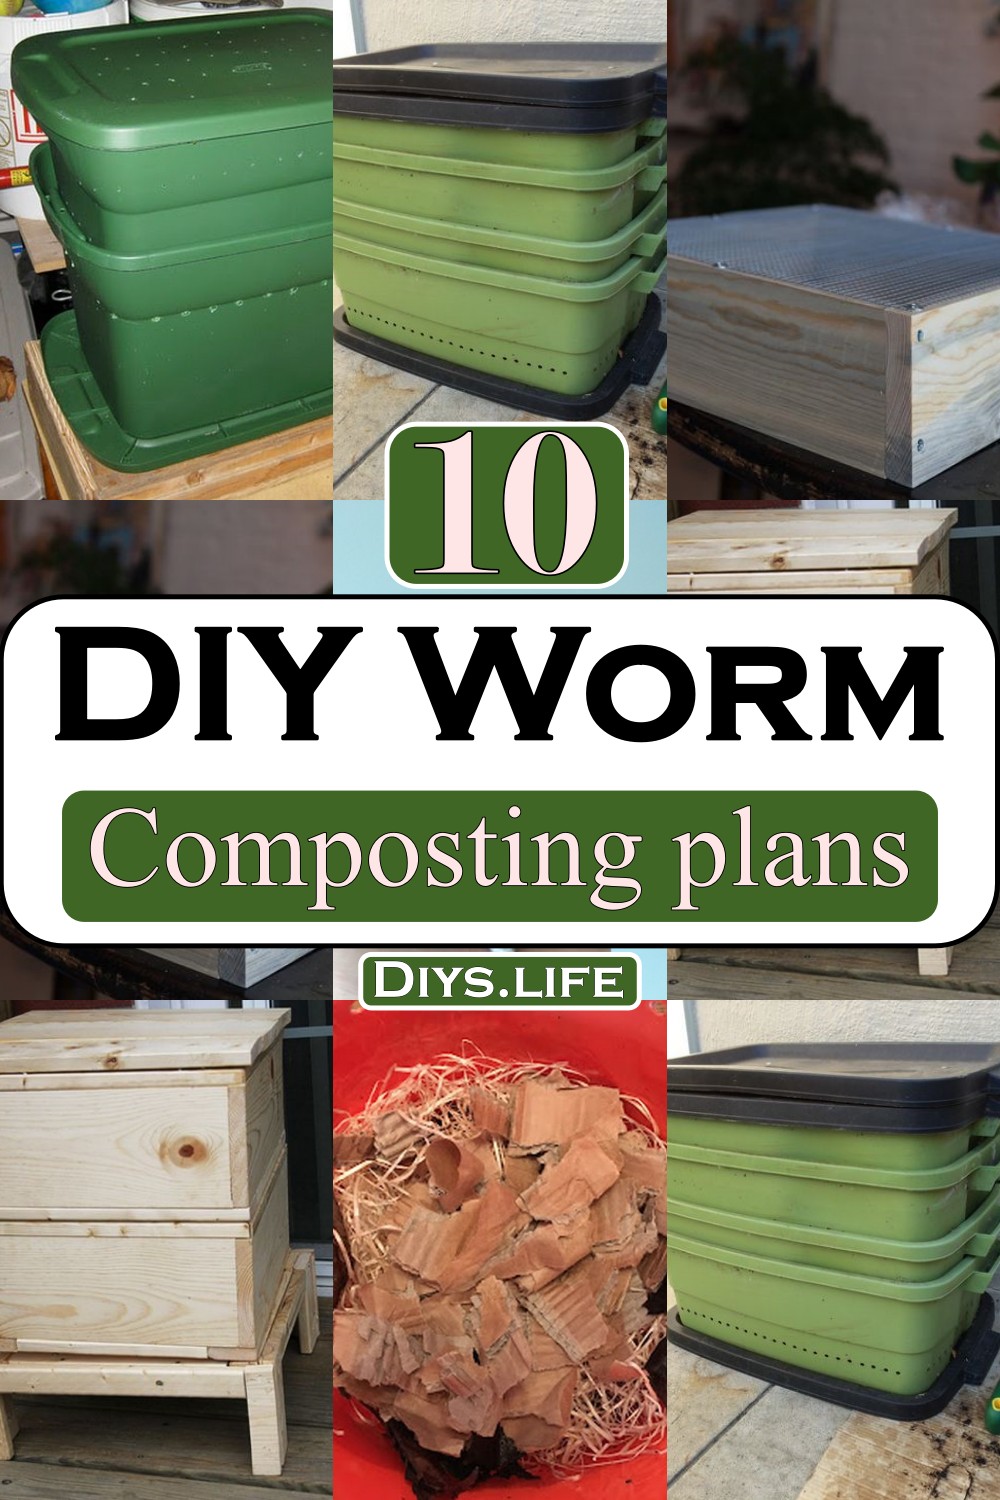 DIY Worm Composting plans